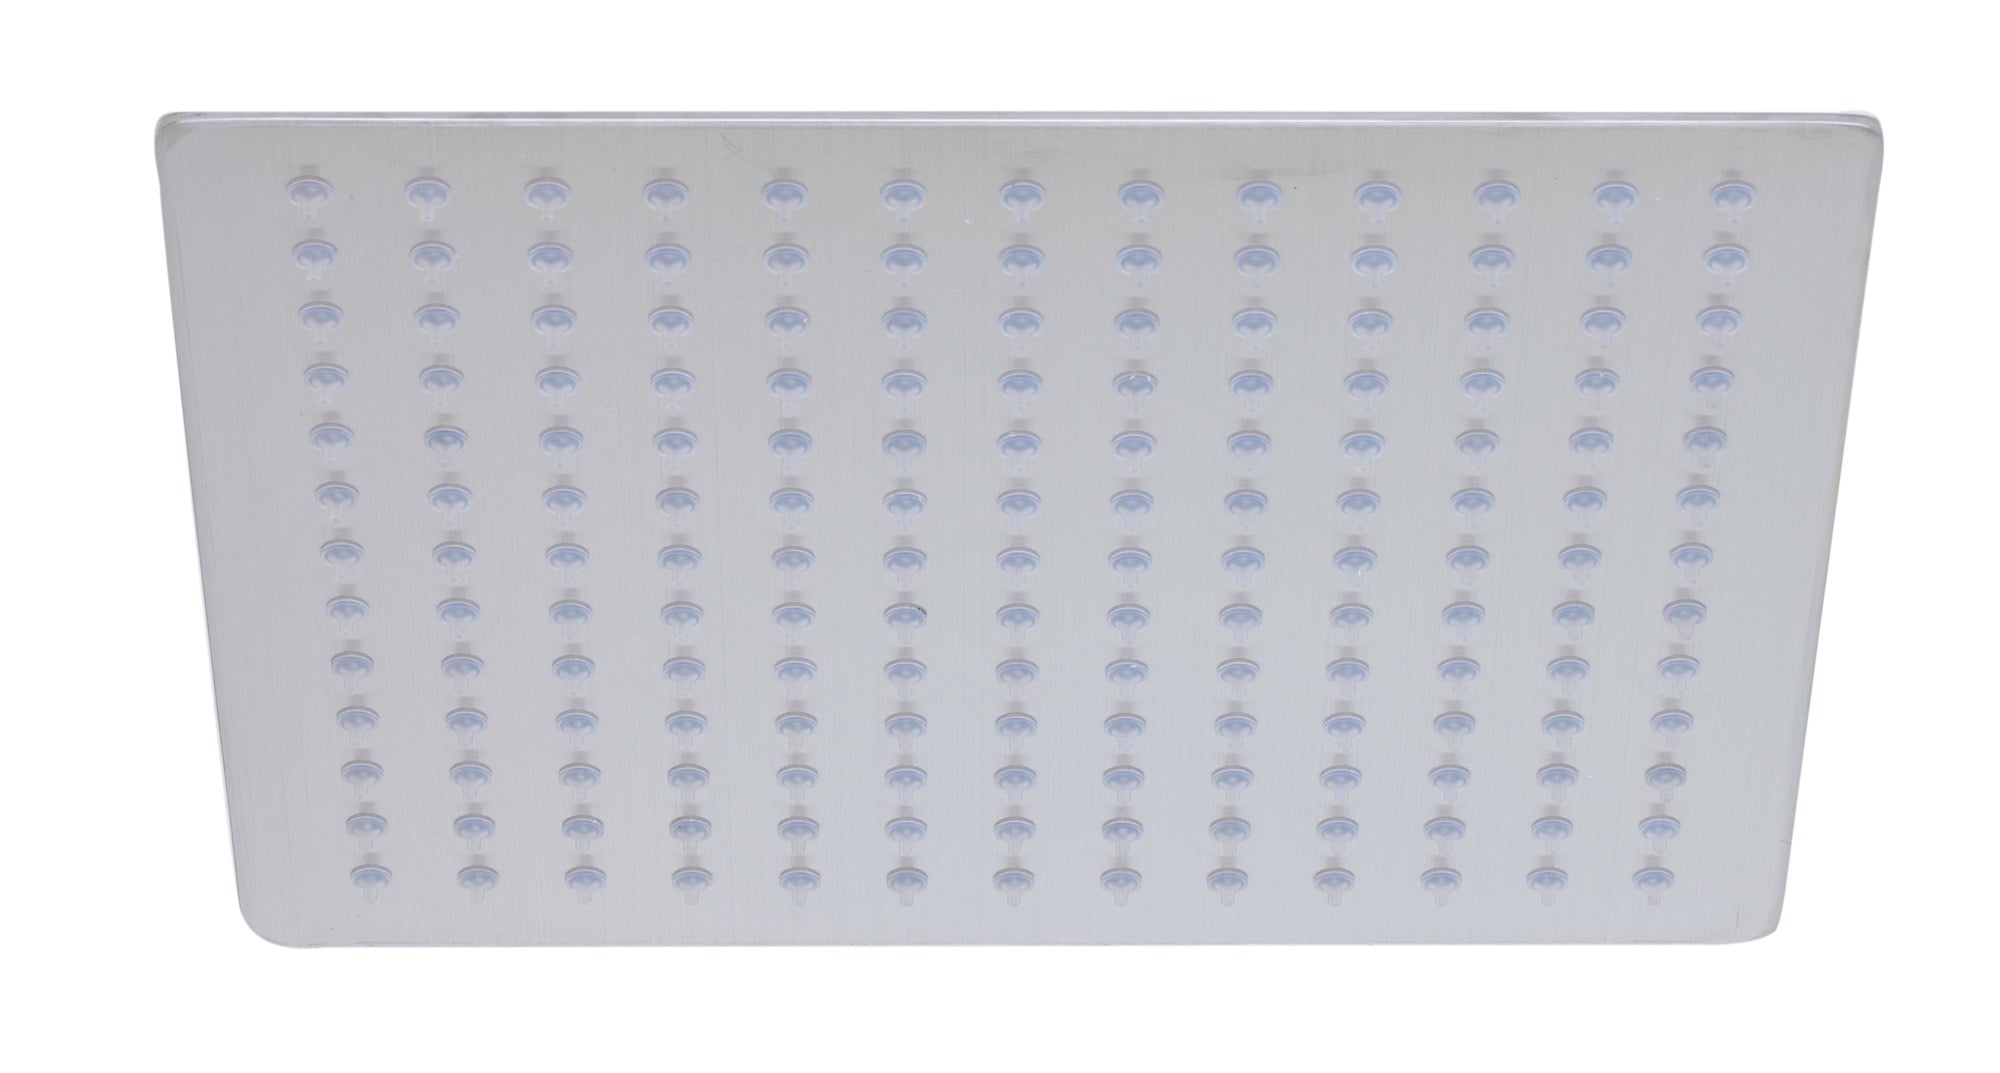 ALFI Brand - Solid Brushed Stainless Steel 12" Square Ultra Thin Rain Shower Head | RAIN12S-BSS